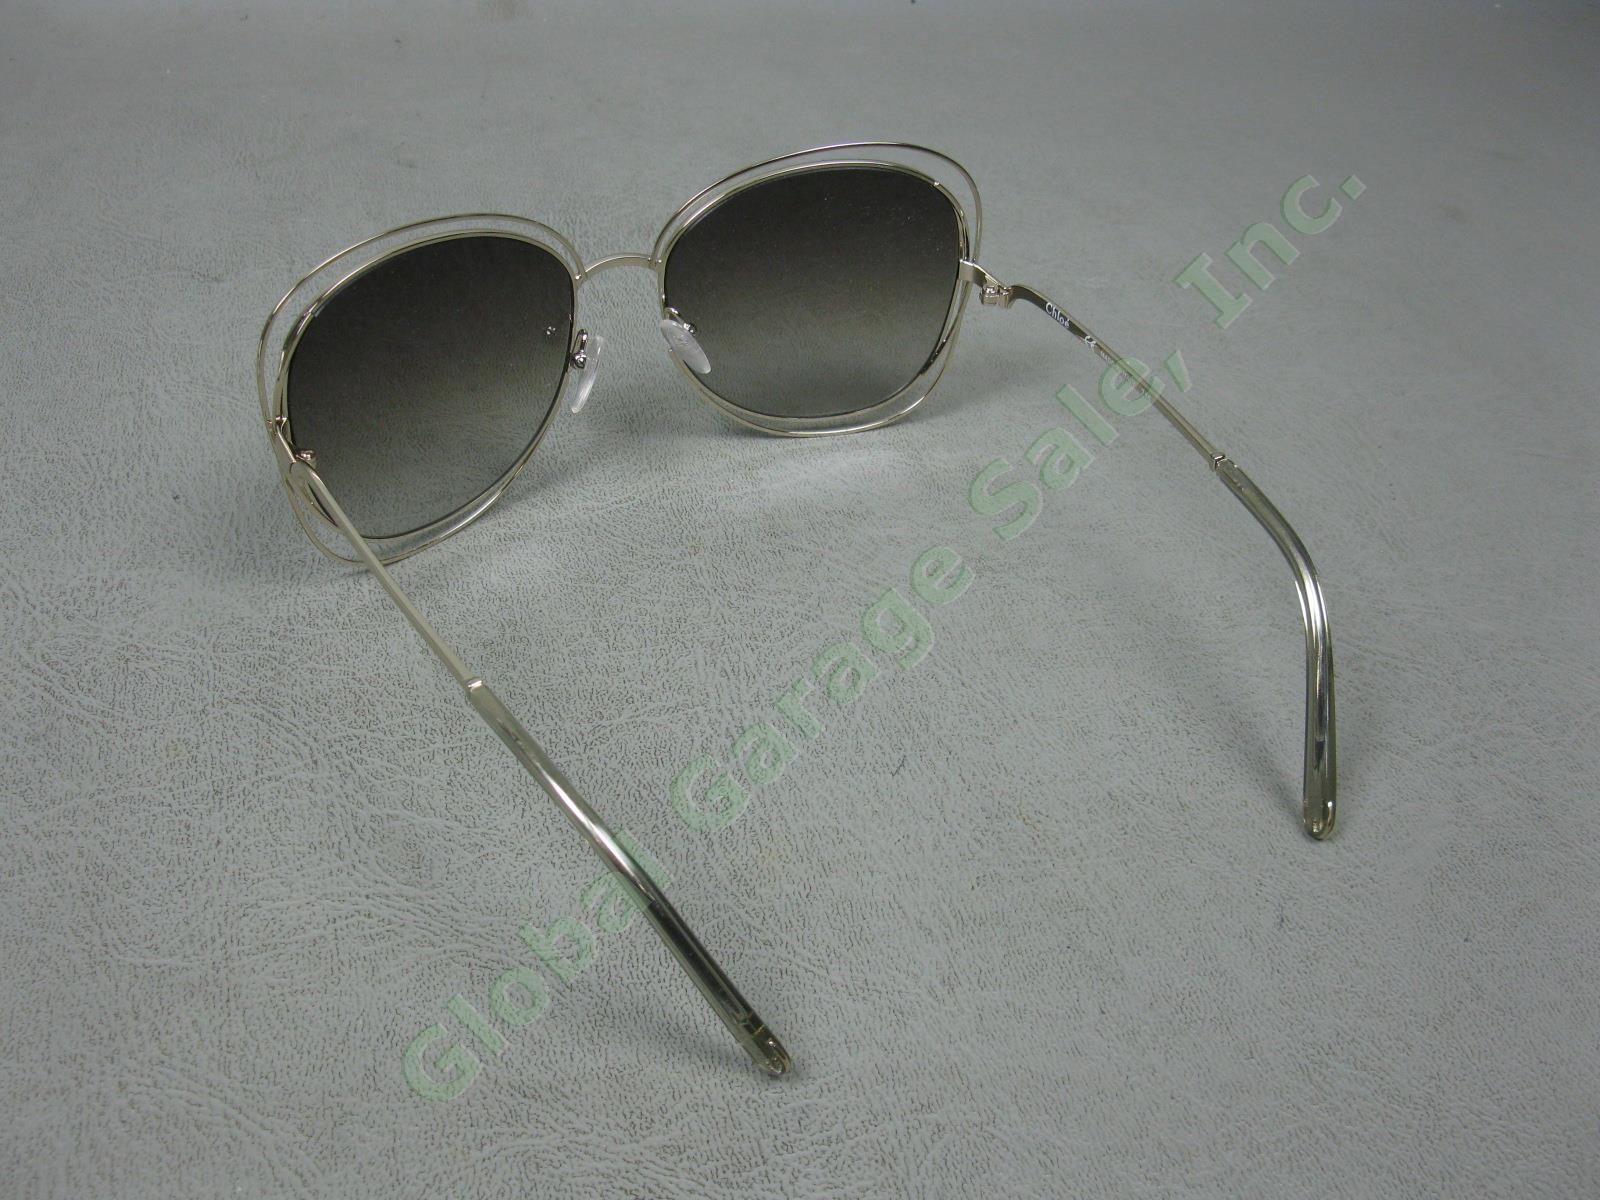 NEW Chloe Carline Gold Frame Sunglasses Green Shaded Lenses CE119S 733 60 18 135 3